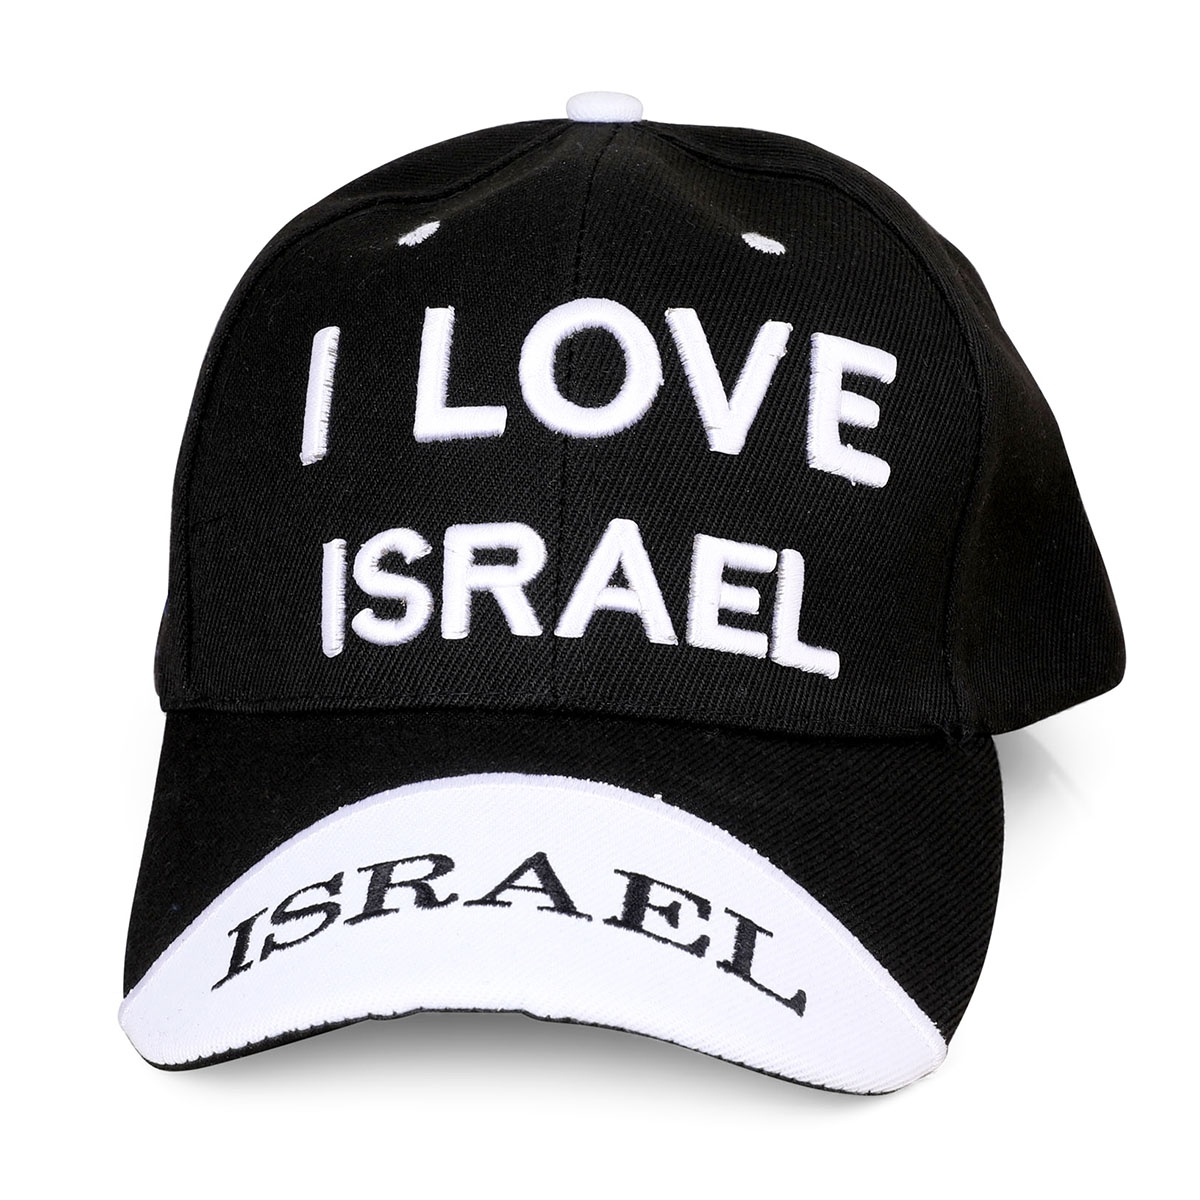 I Love Israel Black Baseball Cap - 1